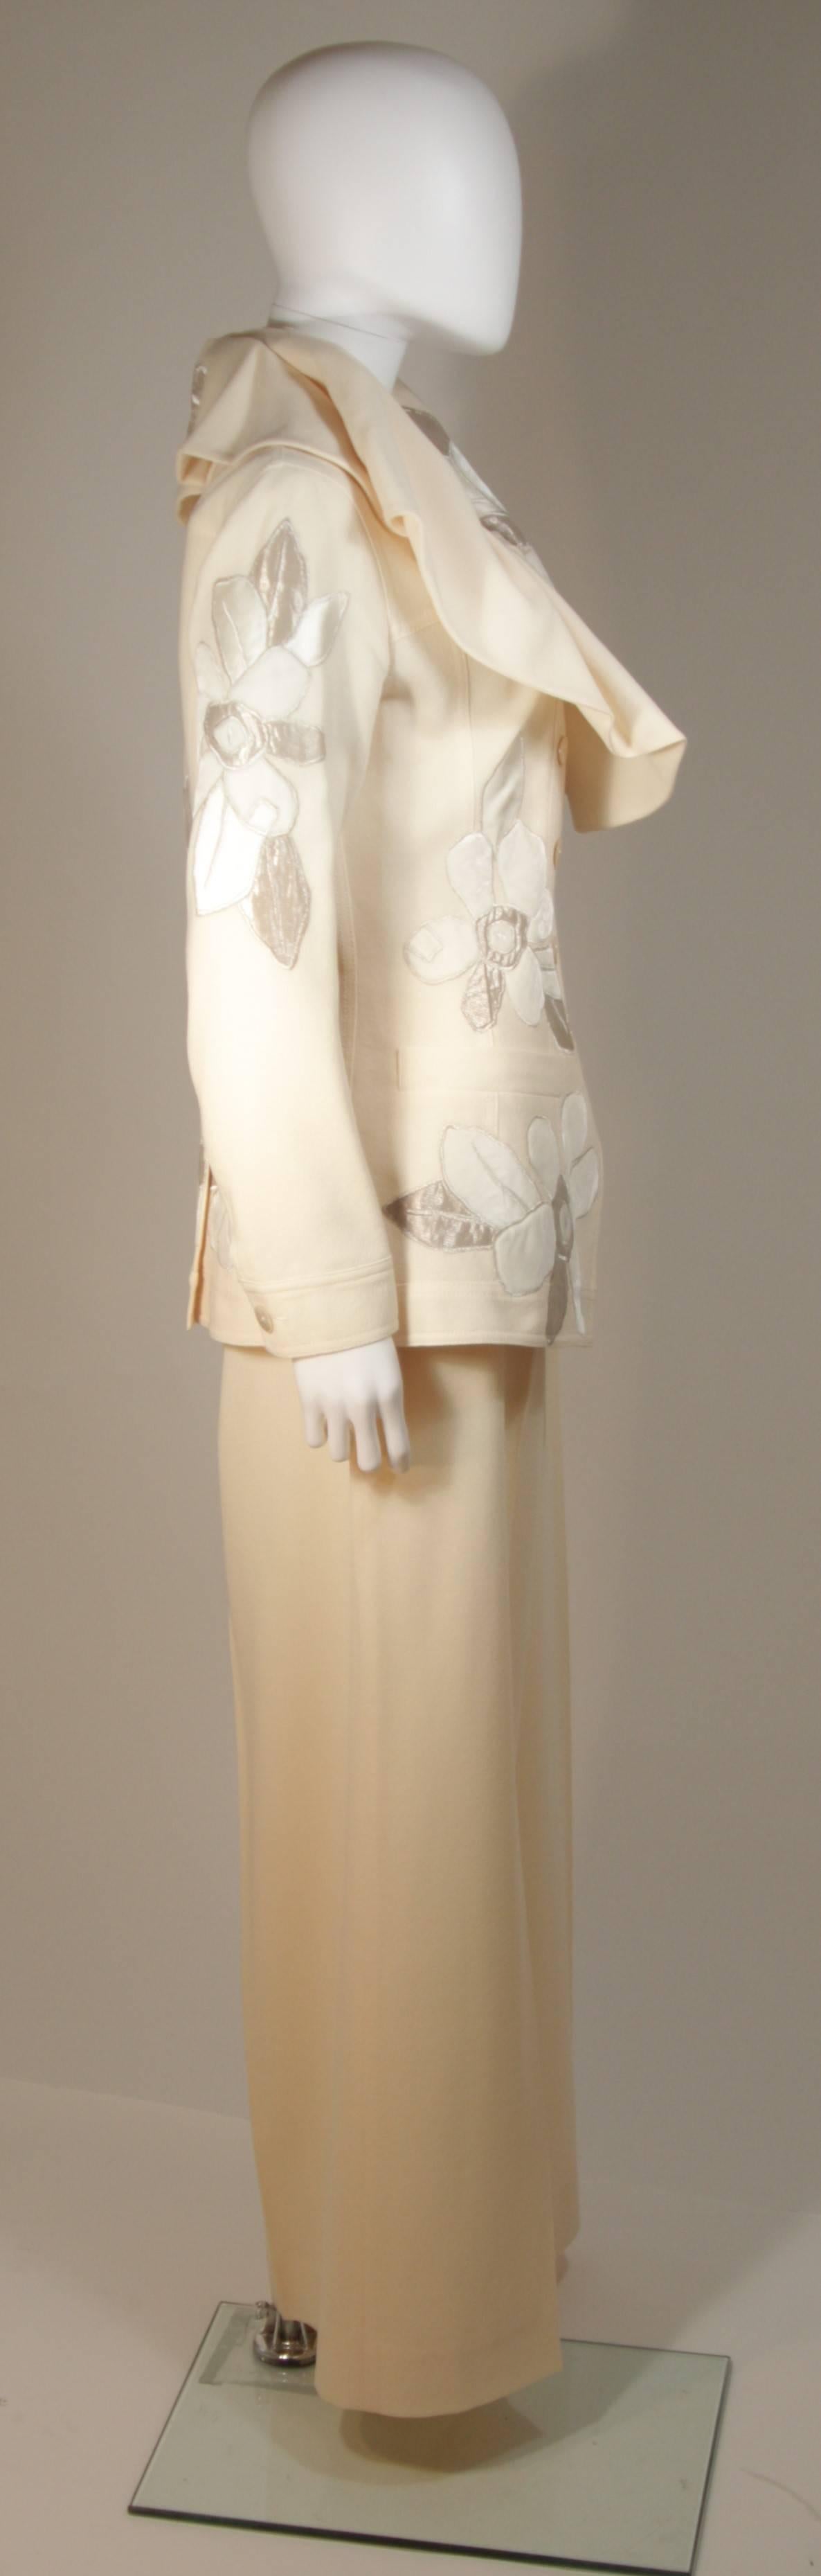 JOHN GALLIANO Ivory Silk Pant Suit with Metallic Applique Size 44 42 1